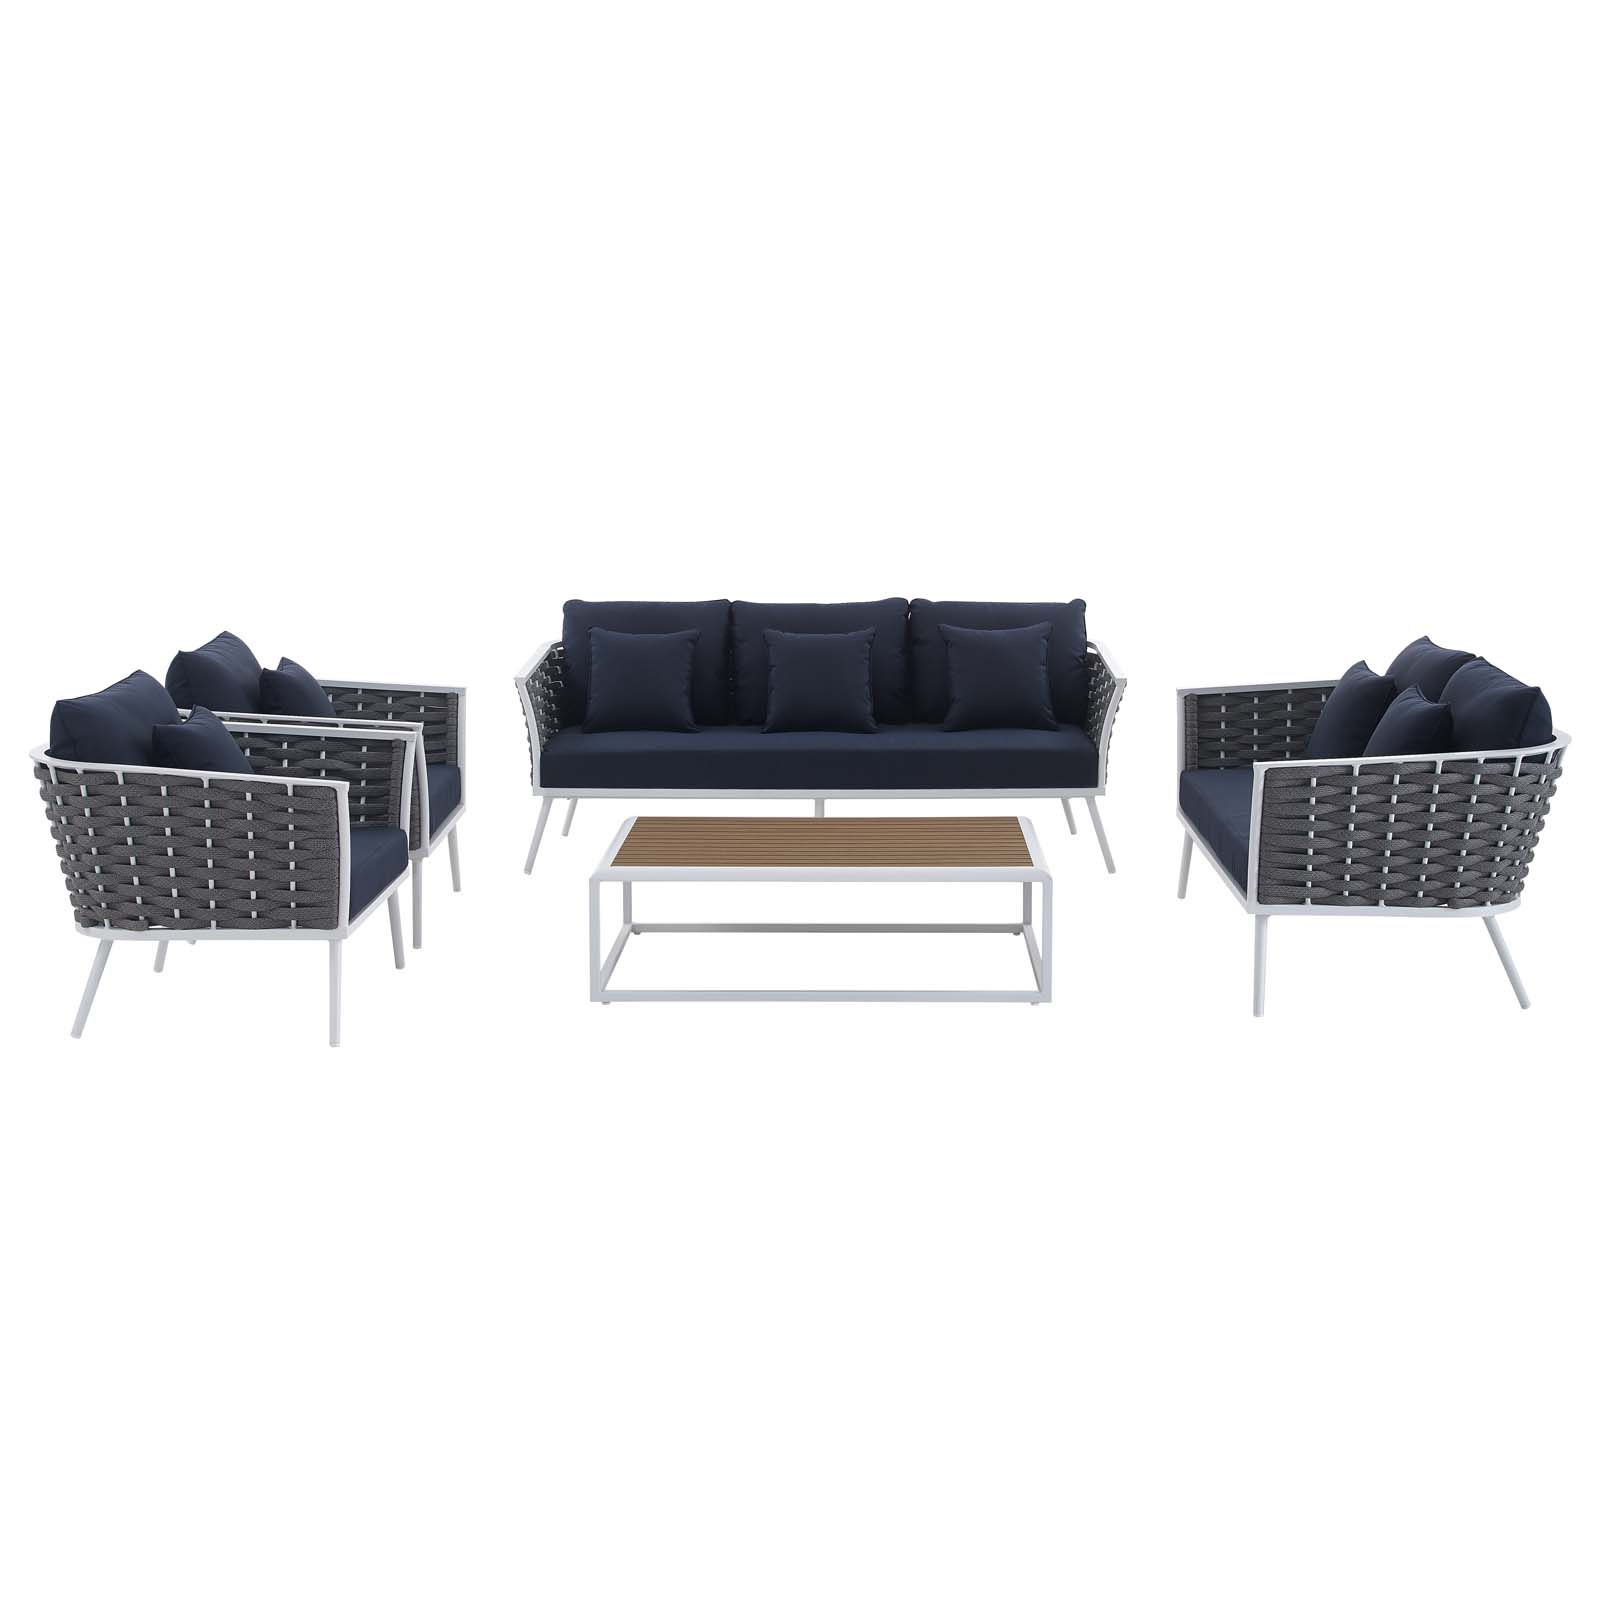 Modern Contemporary Urban Design Outdoor Patio Balcony Garden Furniture Lounge Chair, Sofa and Table Set, Fabric Aluminium, White Navy - image 6 of 11